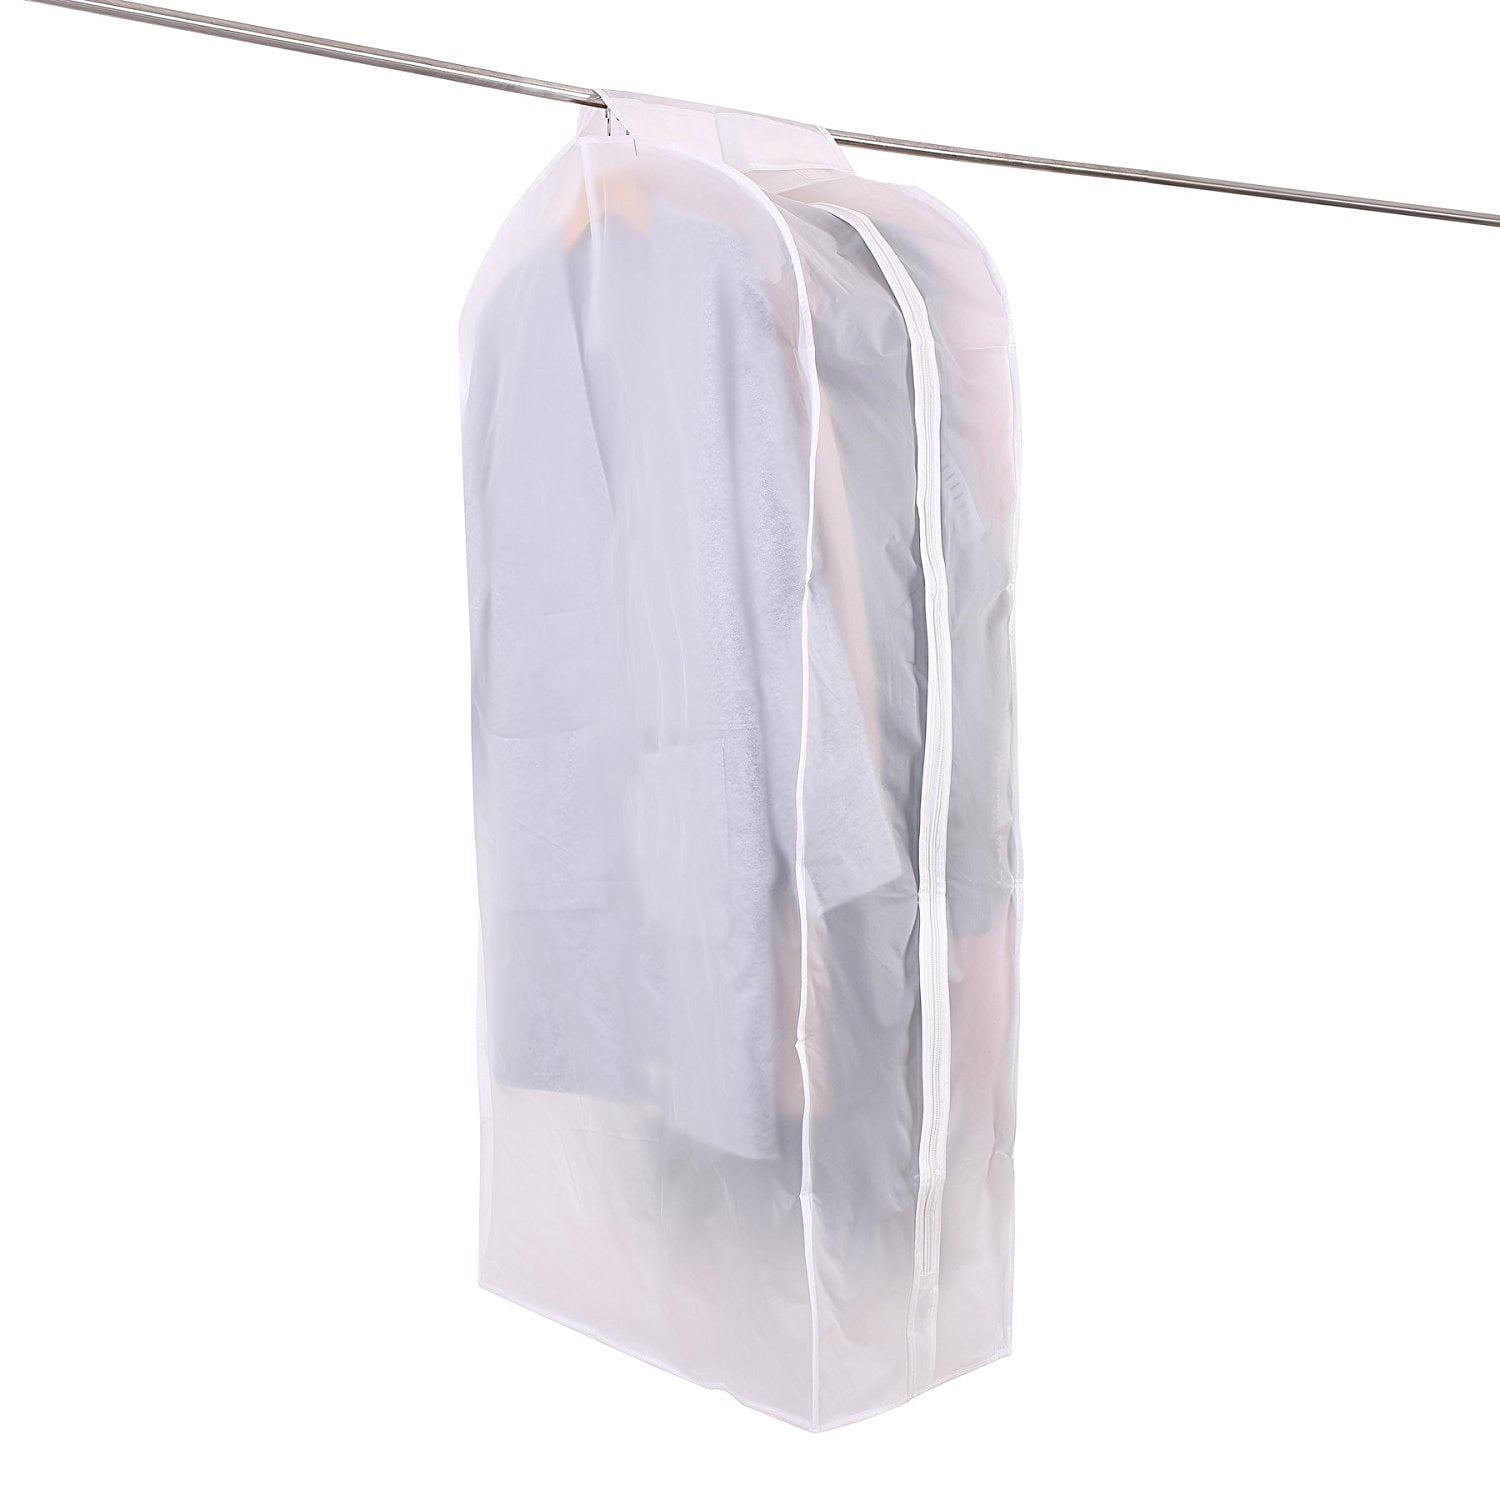 2PCS Clear Dust-proof Clothes Cover Suit Dress Garment Bag Storage Protector Bag 